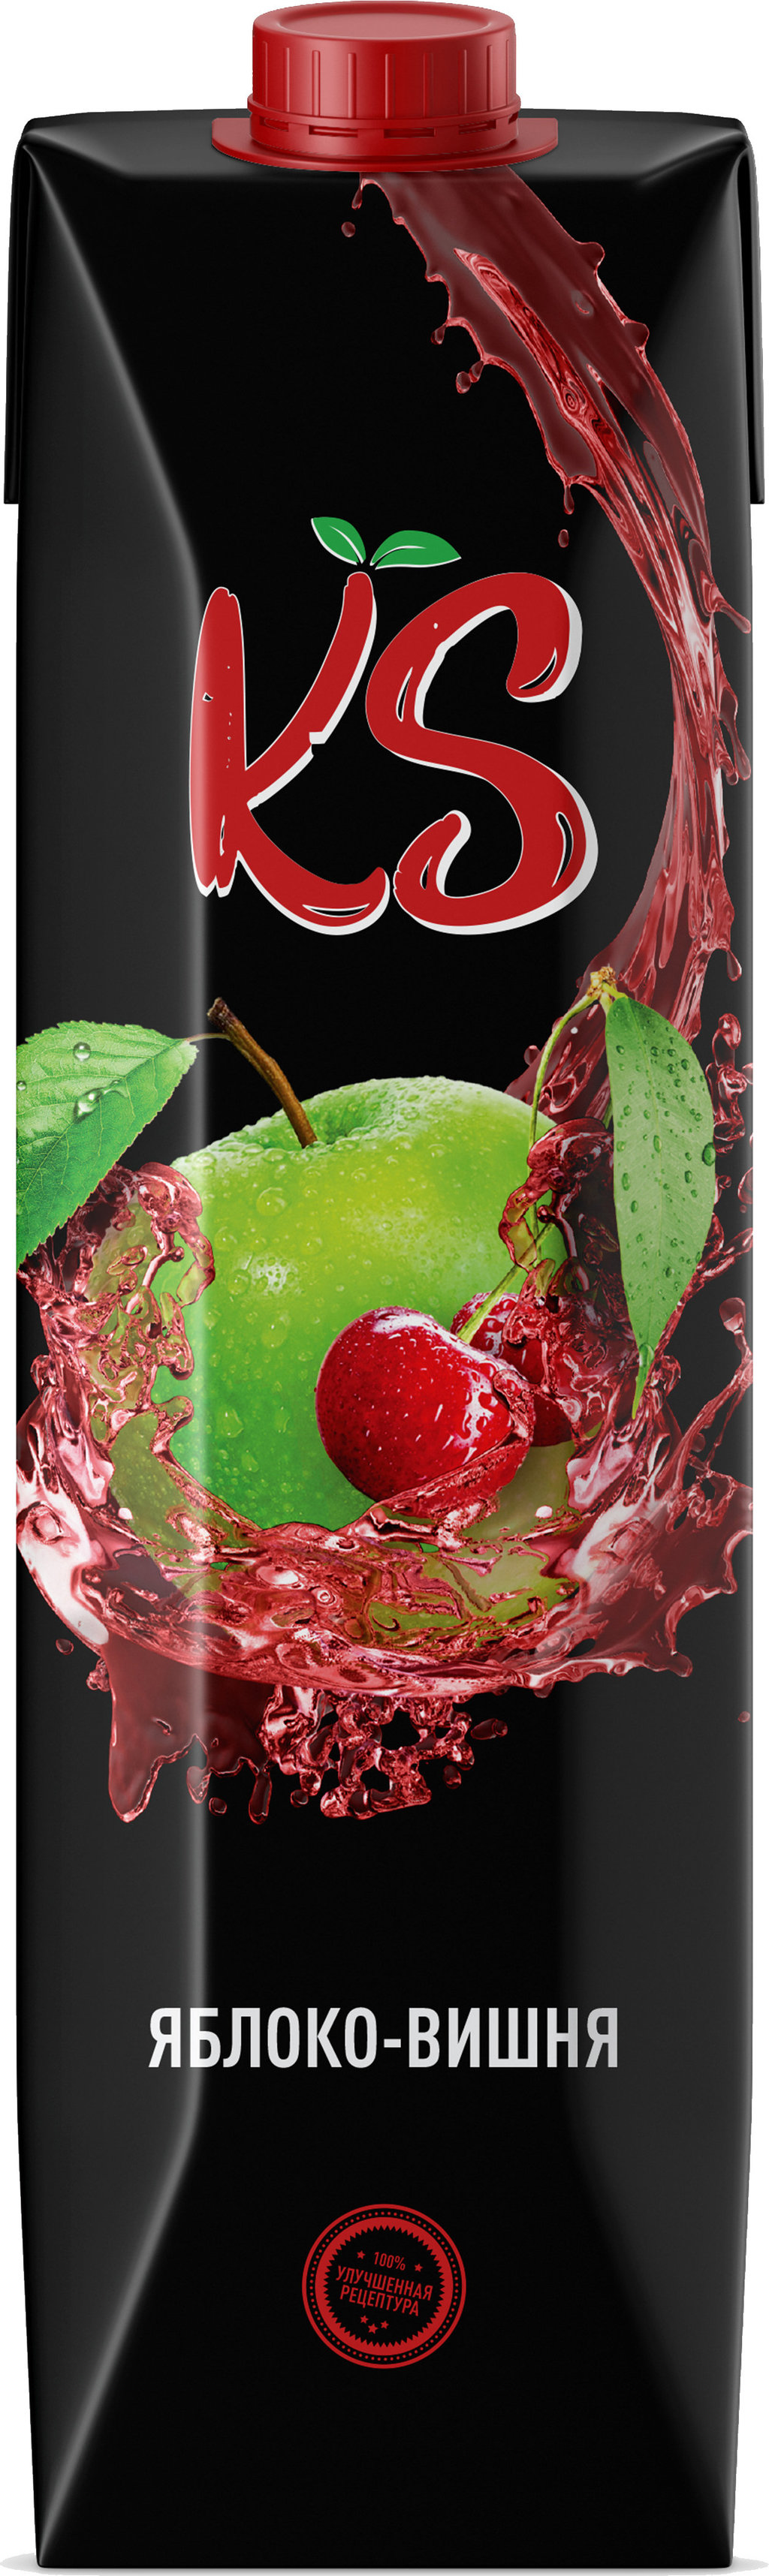 Apple-cherry juice drink clarified